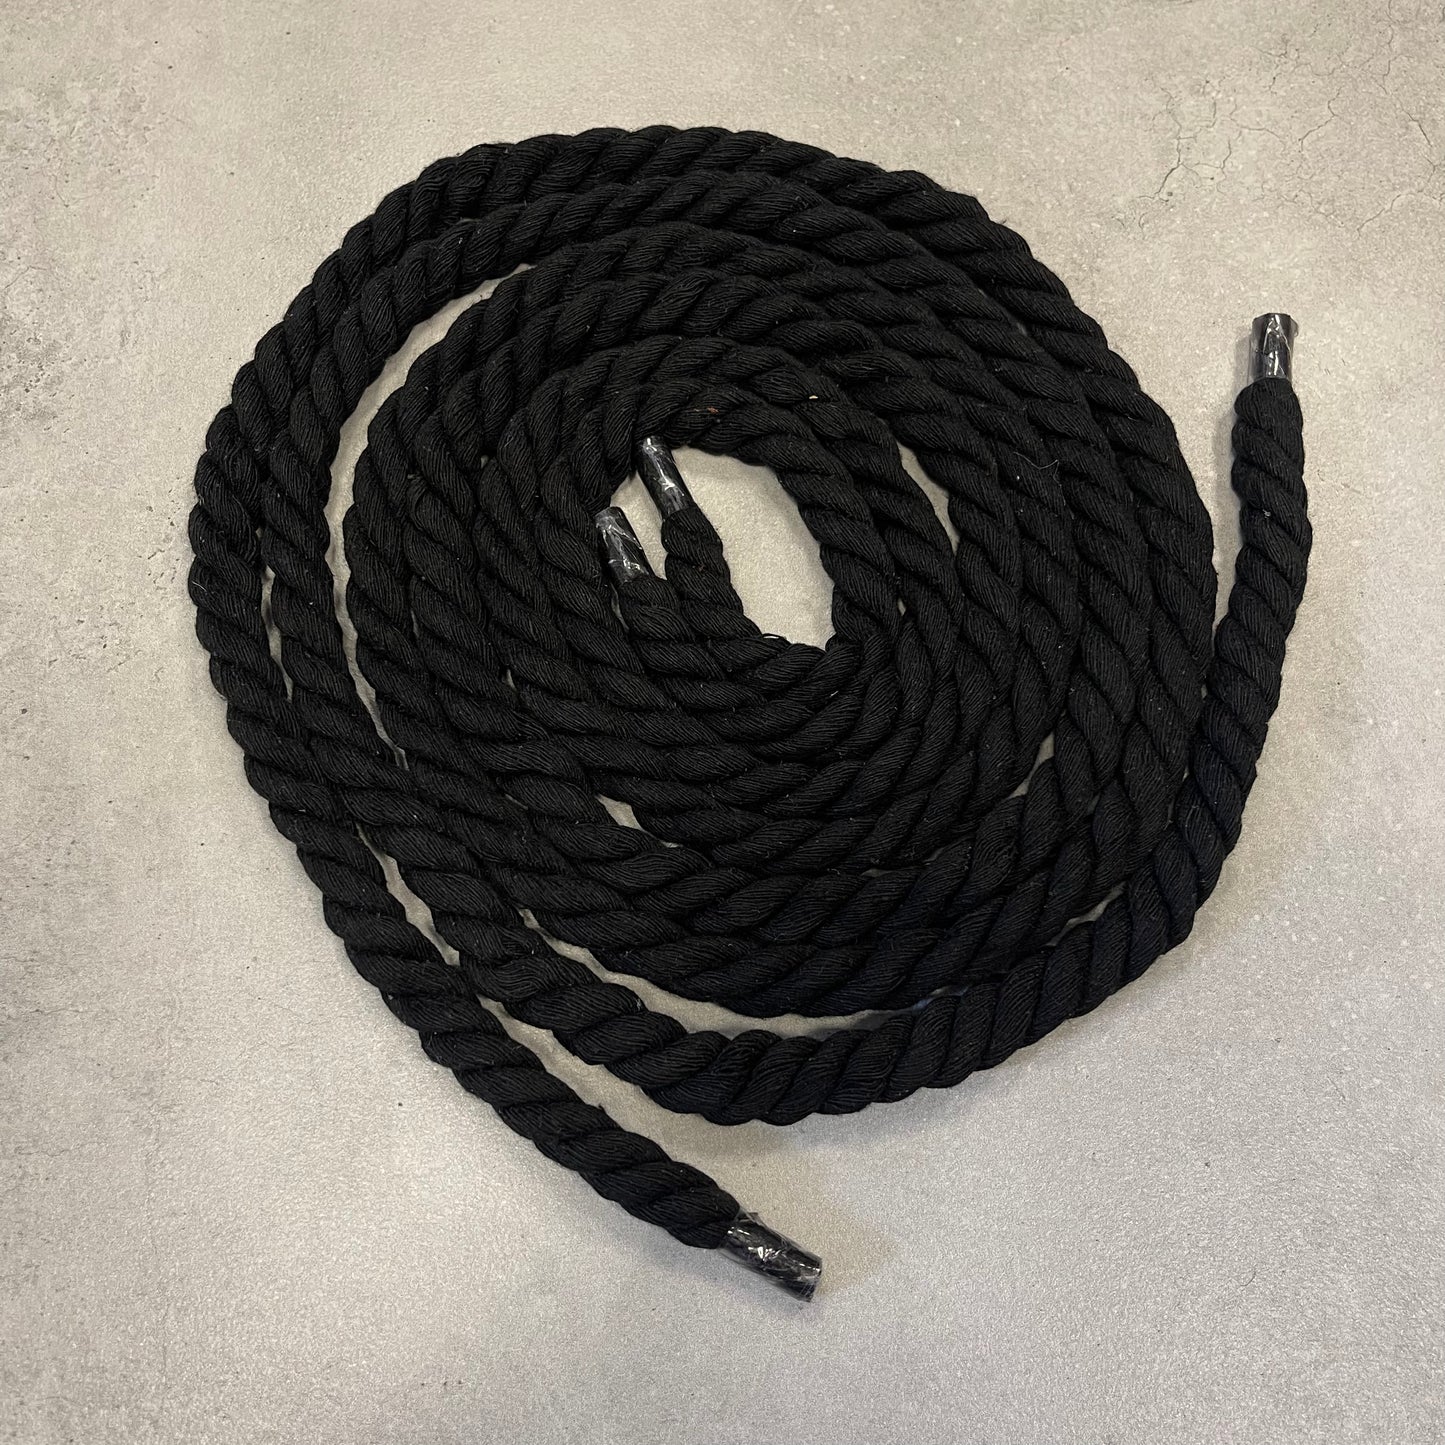 Rope laces (black)